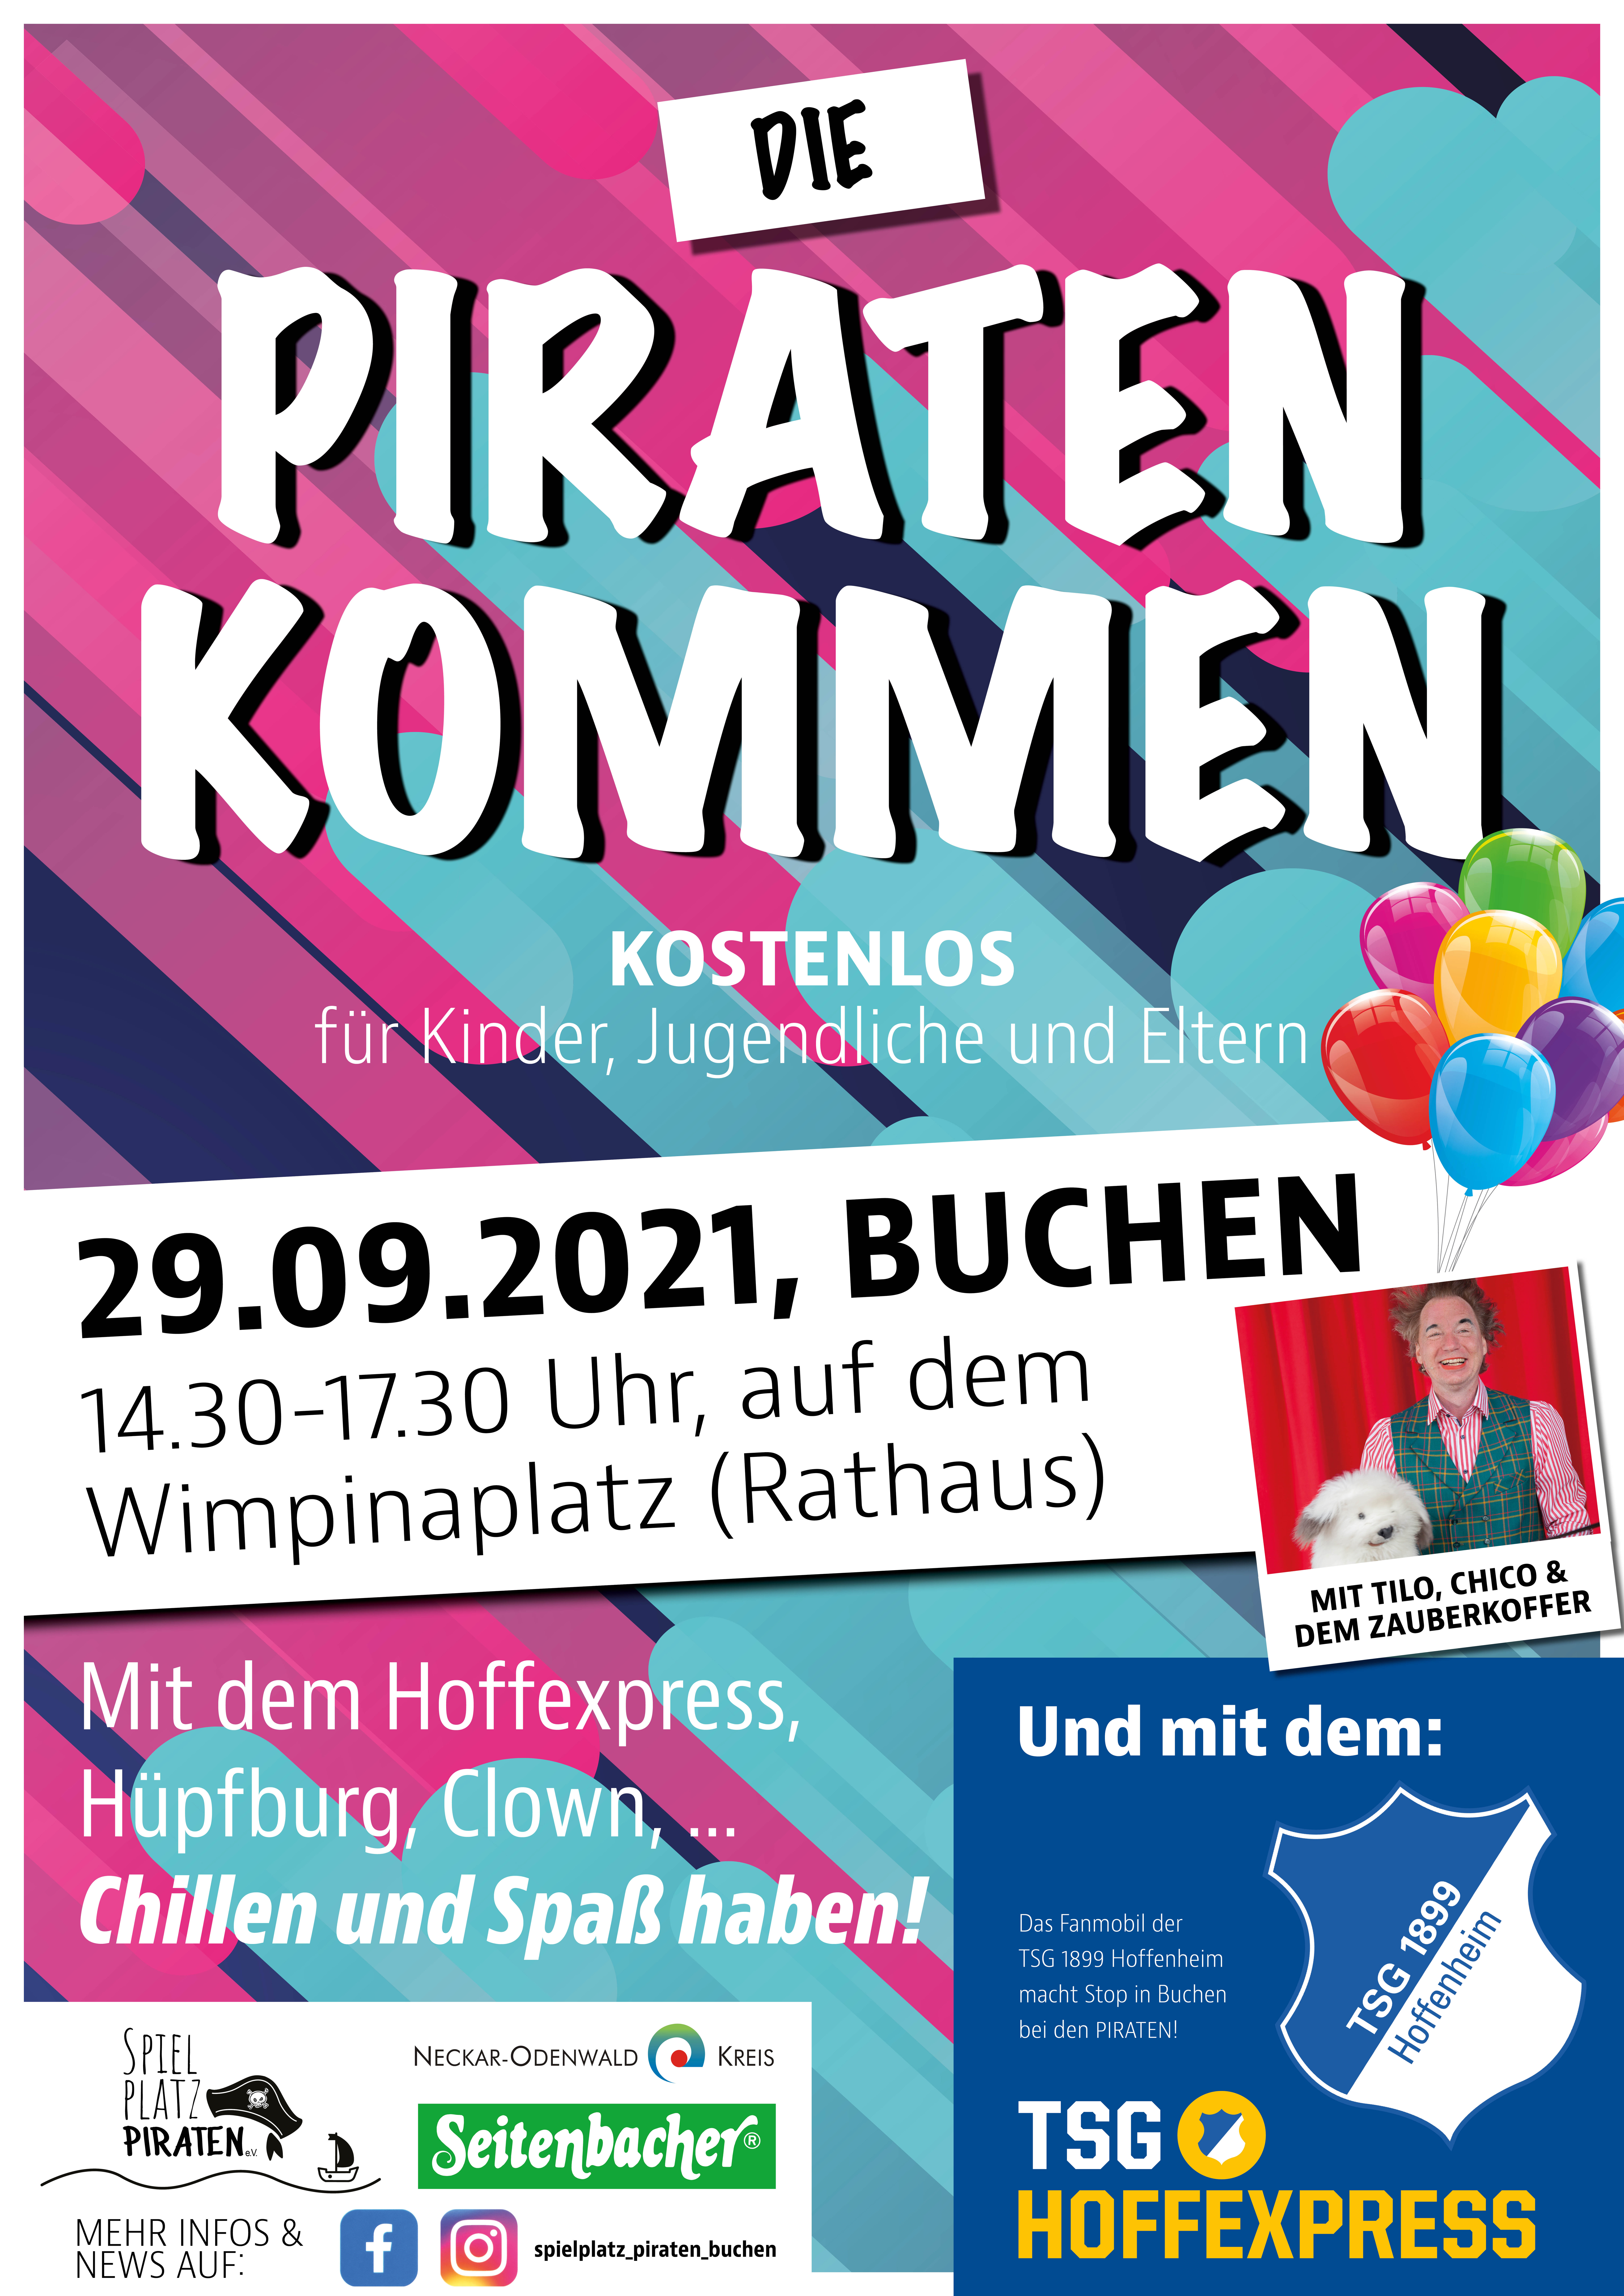 Piratenplakat-Buchen-29-09-2021-NEU.jpg - 5,76 MB